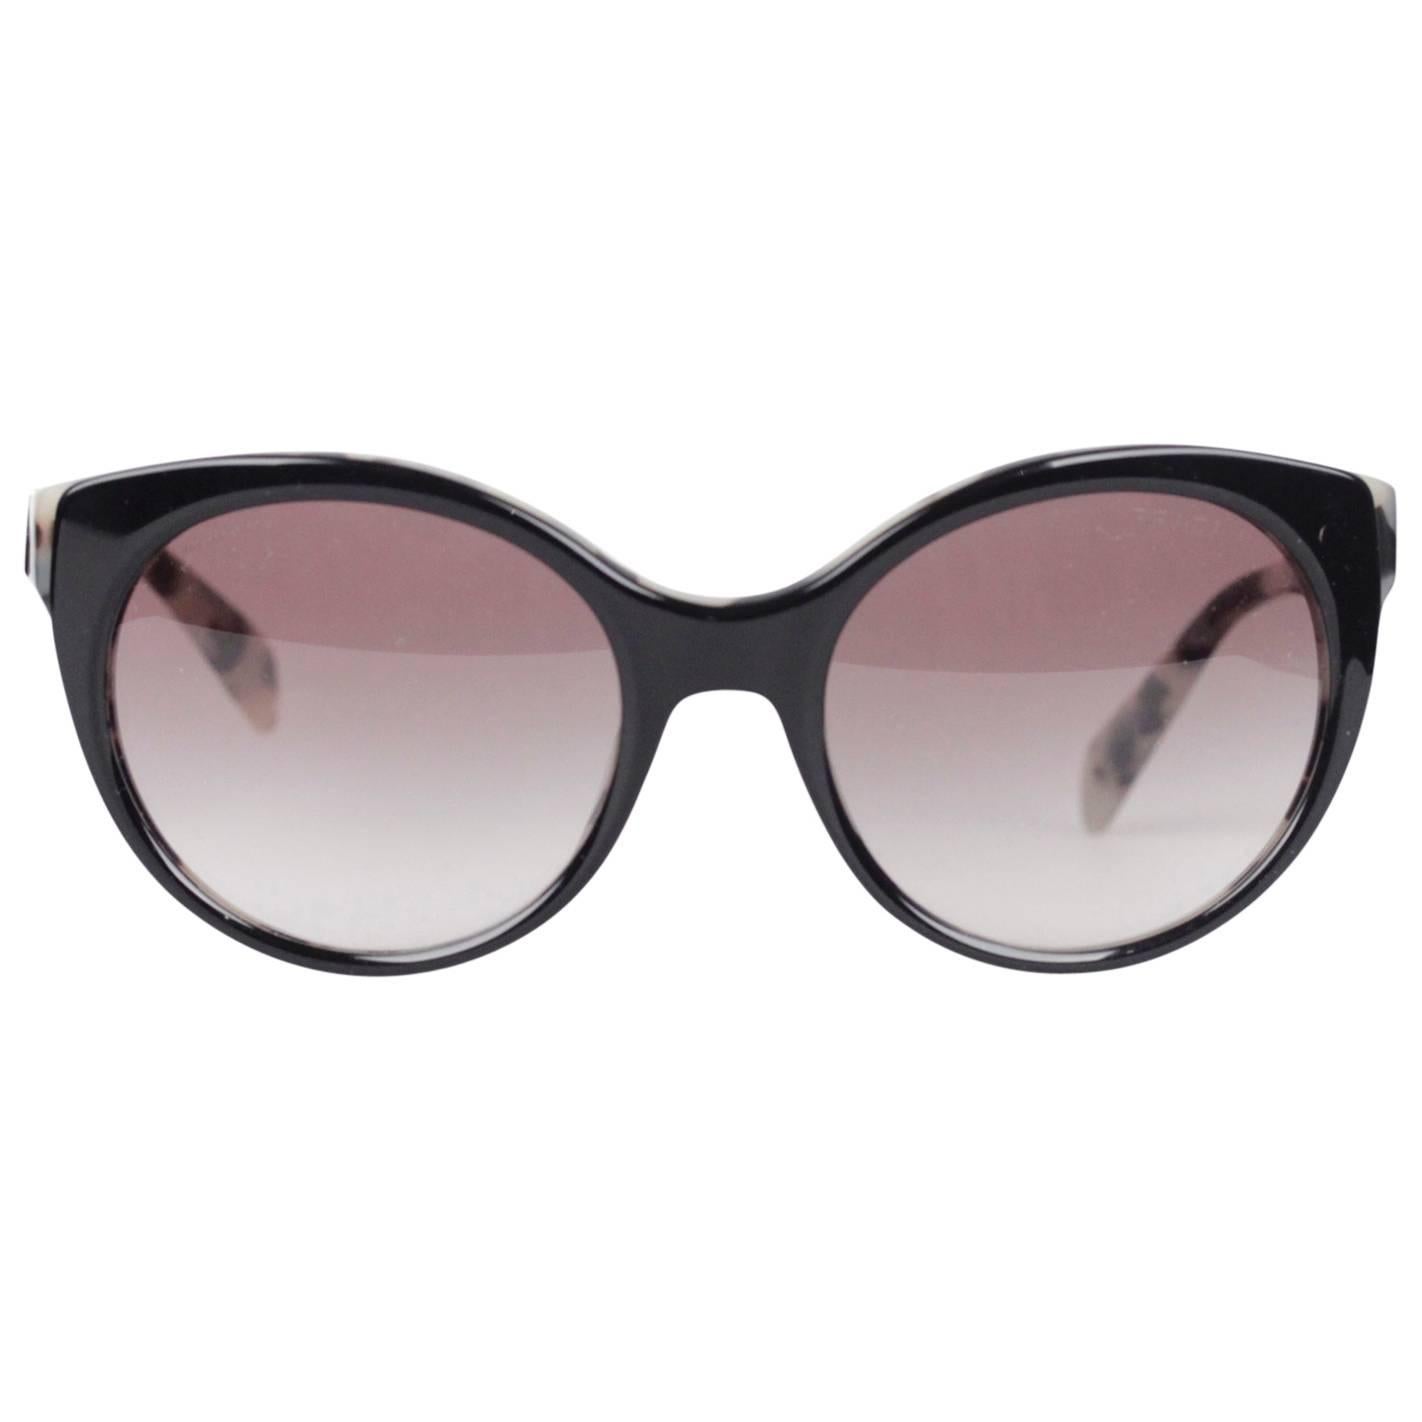 PRADA Sunglasses SPR 230 56/20 140 2N ANIMALIER pattern w/CASE & BOX